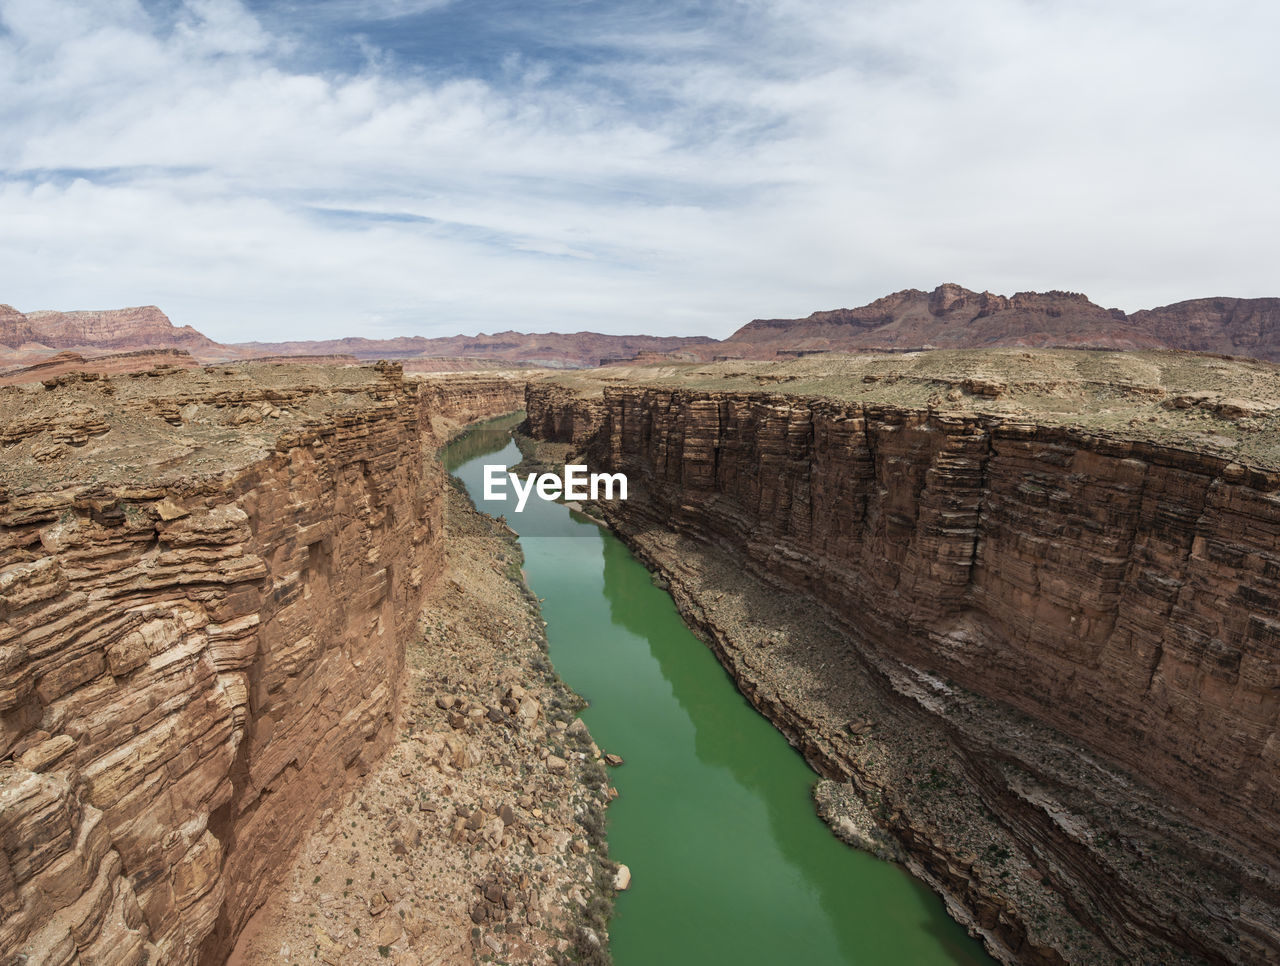 The colorado river cuts a green line through the desert in marbl